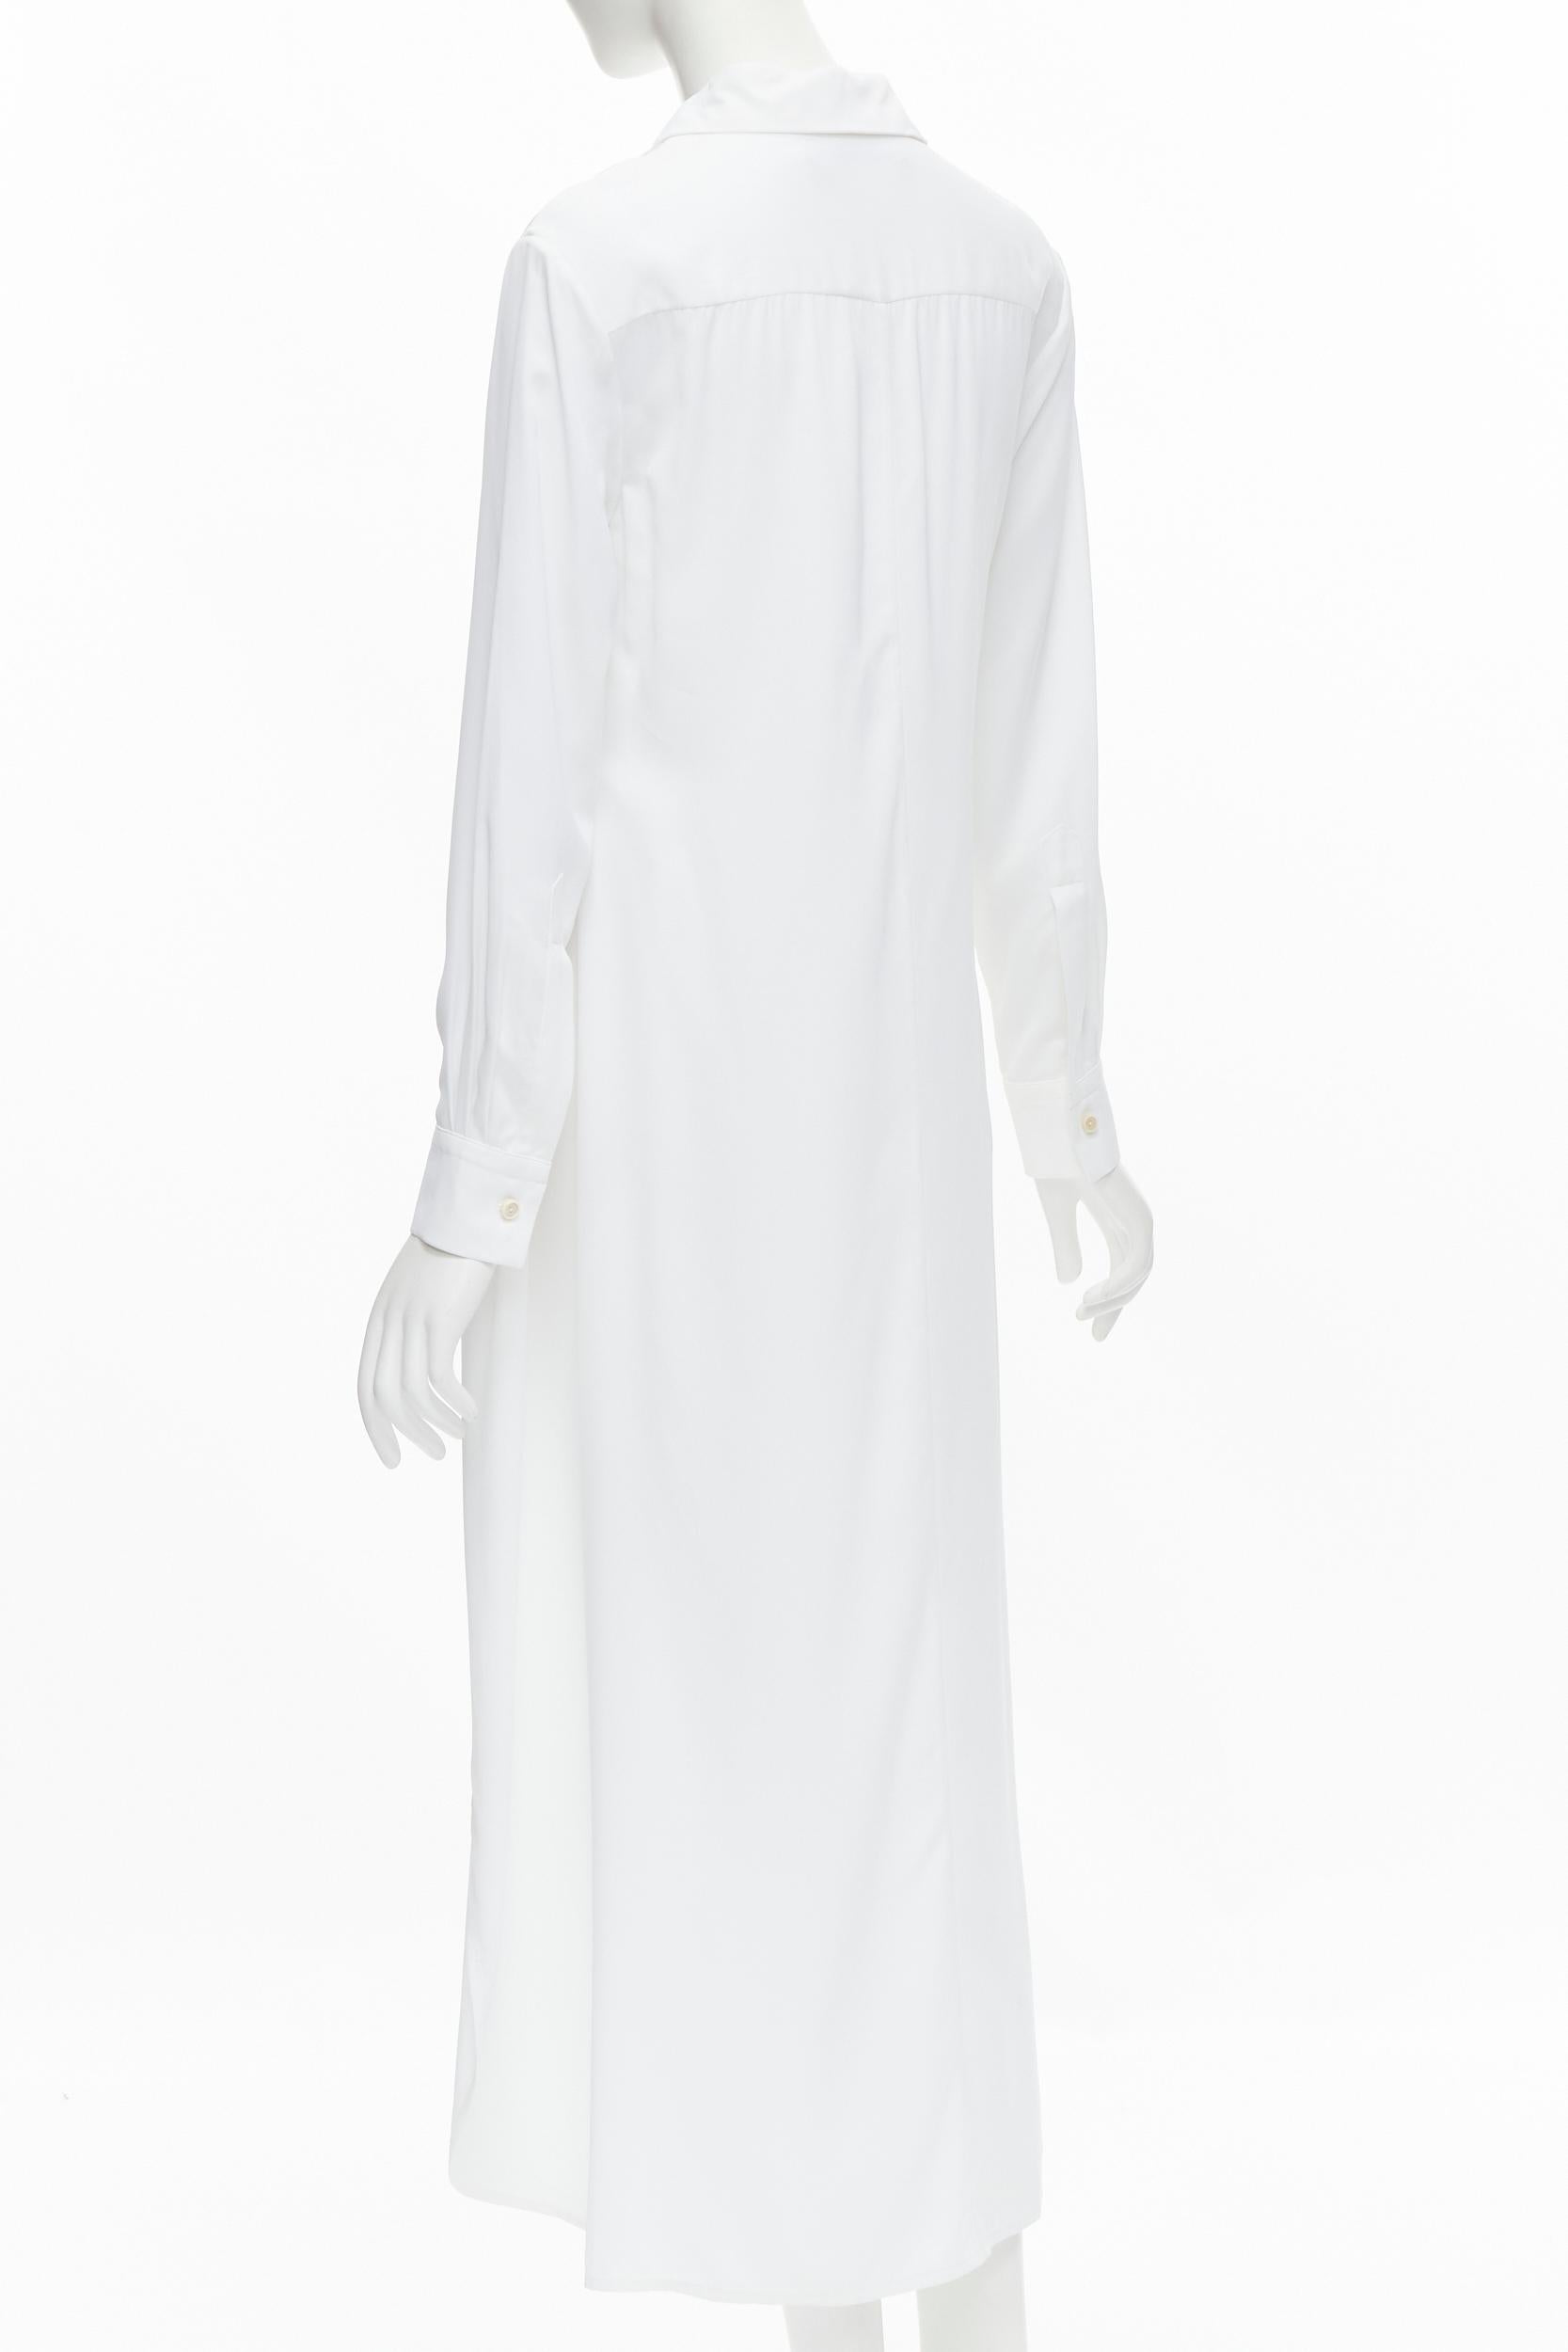 ROSETTA GETTY white viscose  long sleeve high low train hem shirt top US2 XS For Sale 1